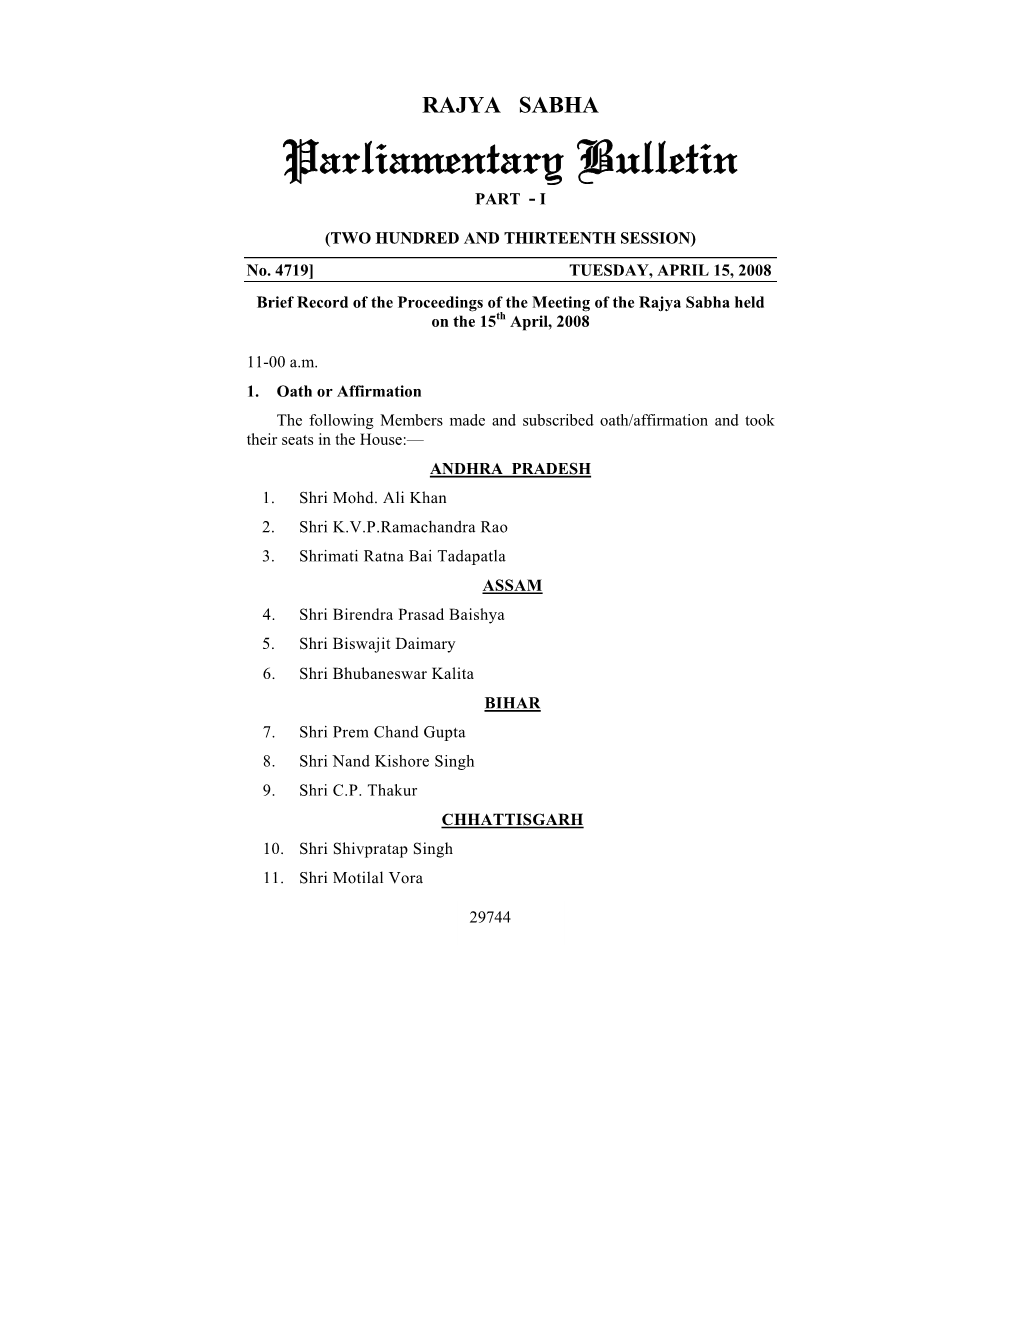 Parliamentary Bulletin PART - I